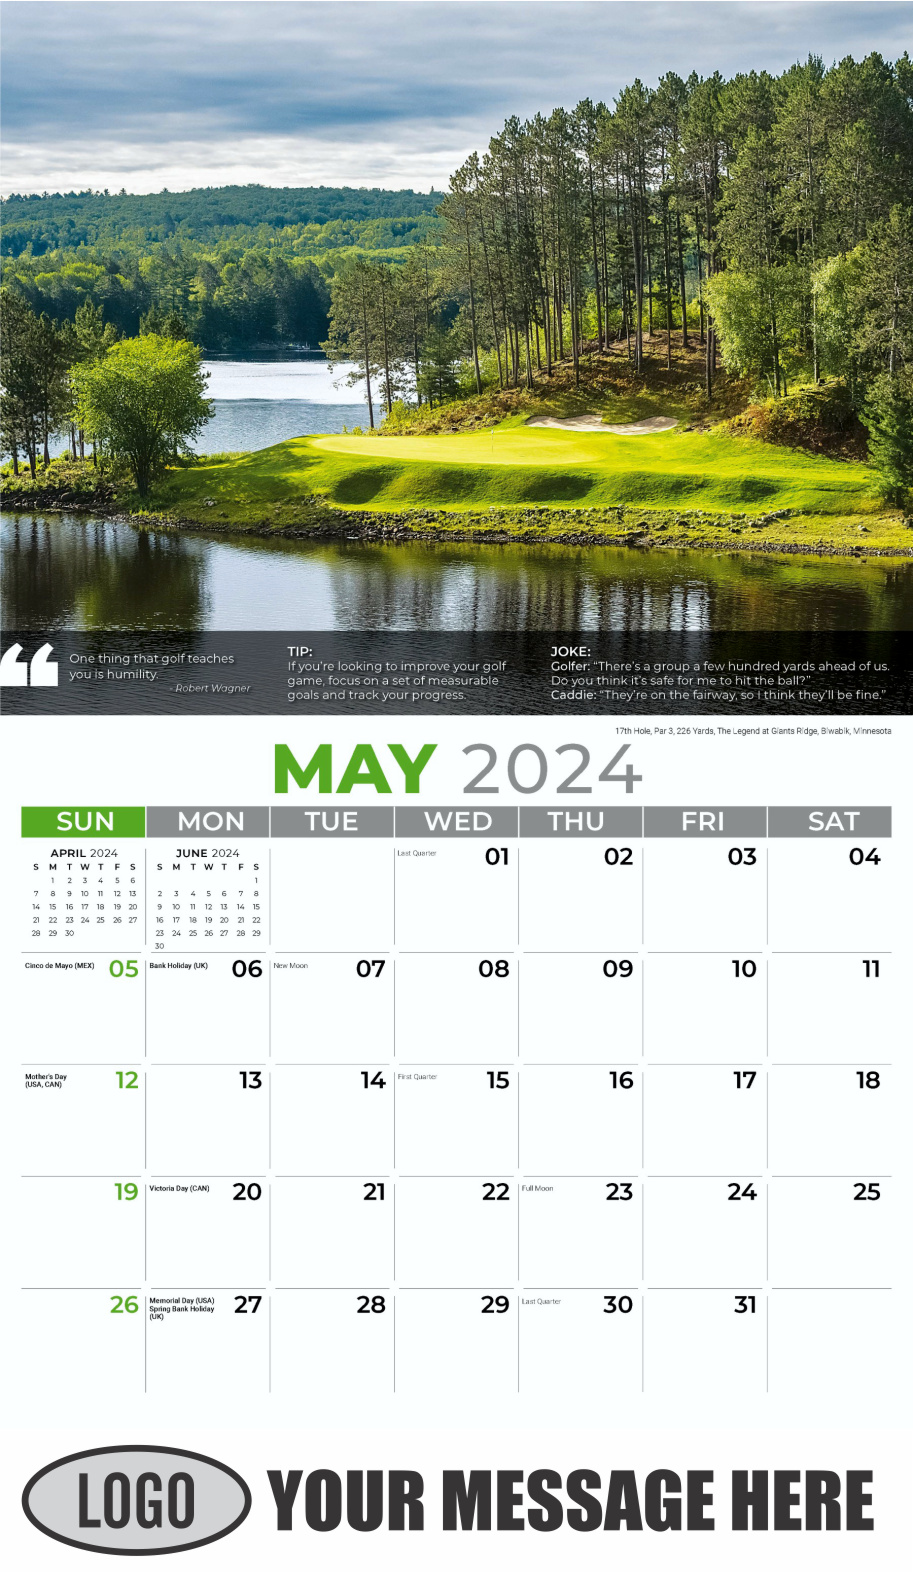 Golf Tips 2024 Business Promo Calendar - May